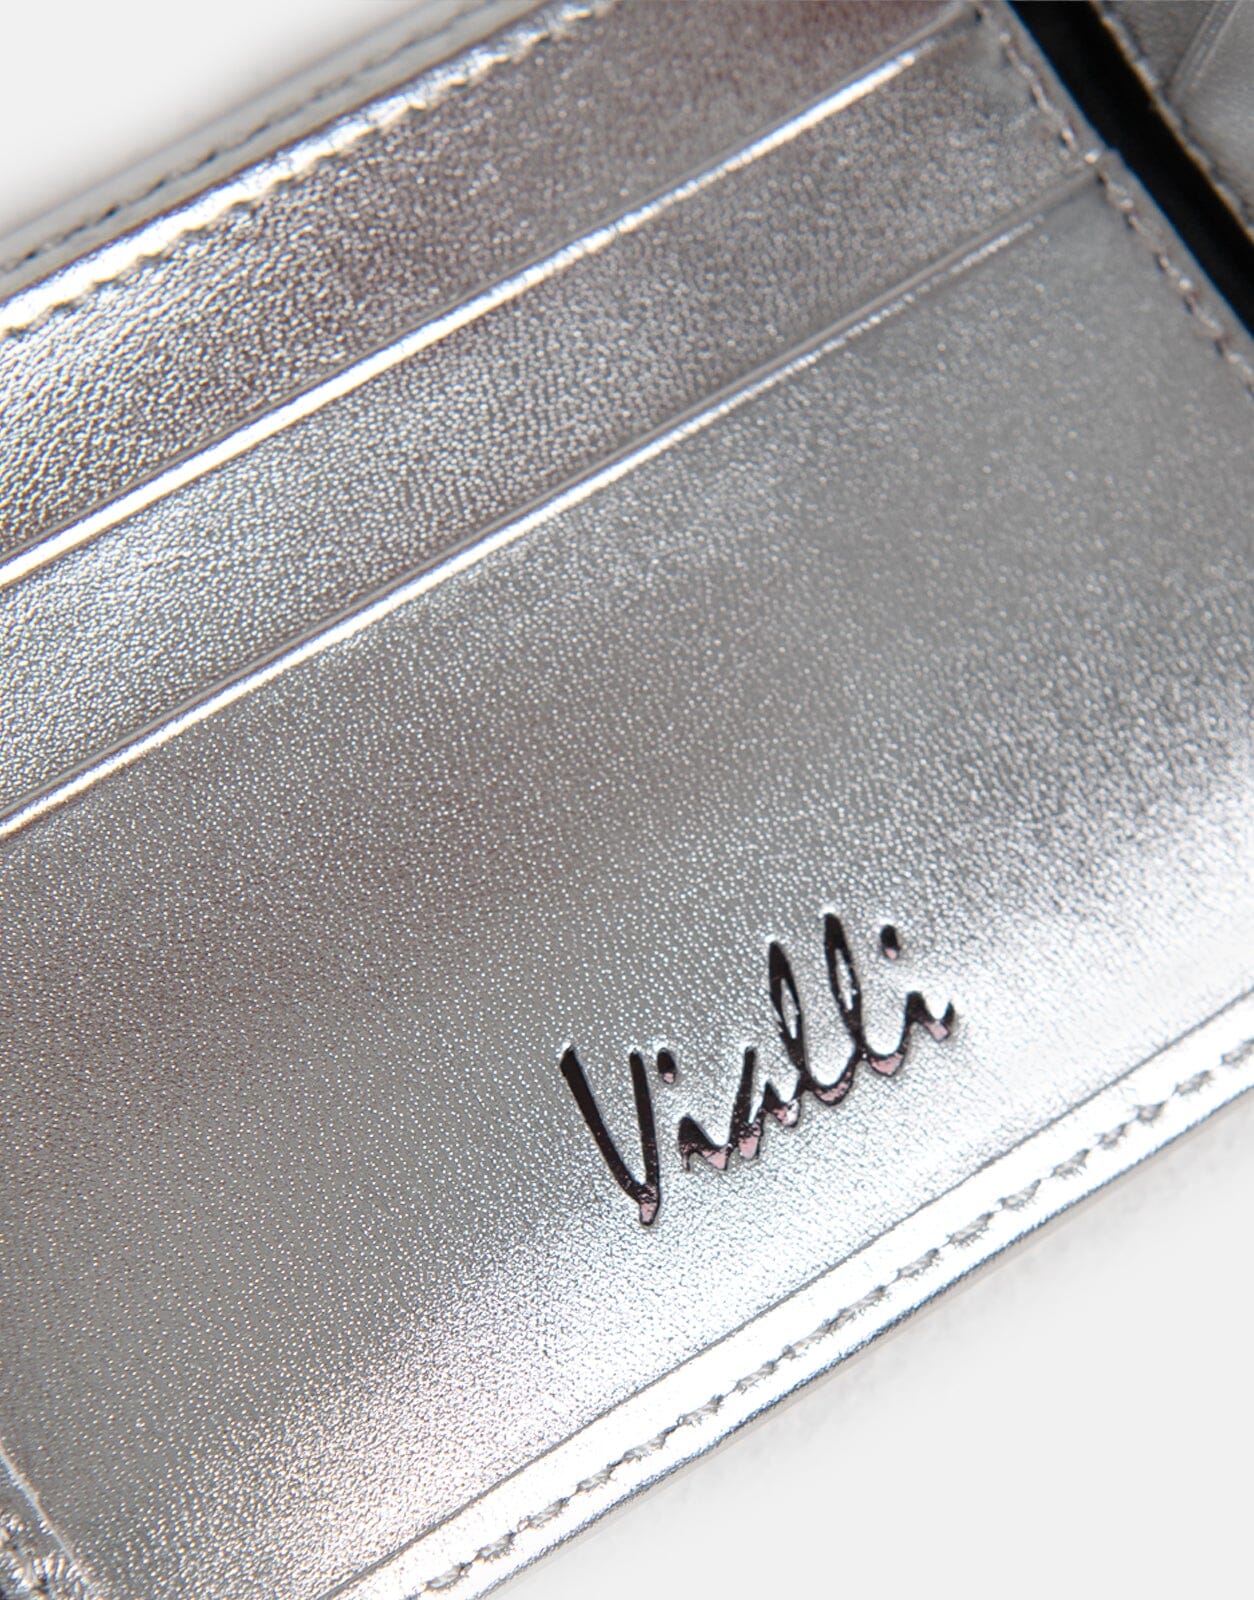 Vialli Patent Silver Tri Fold Wallet - Subwear